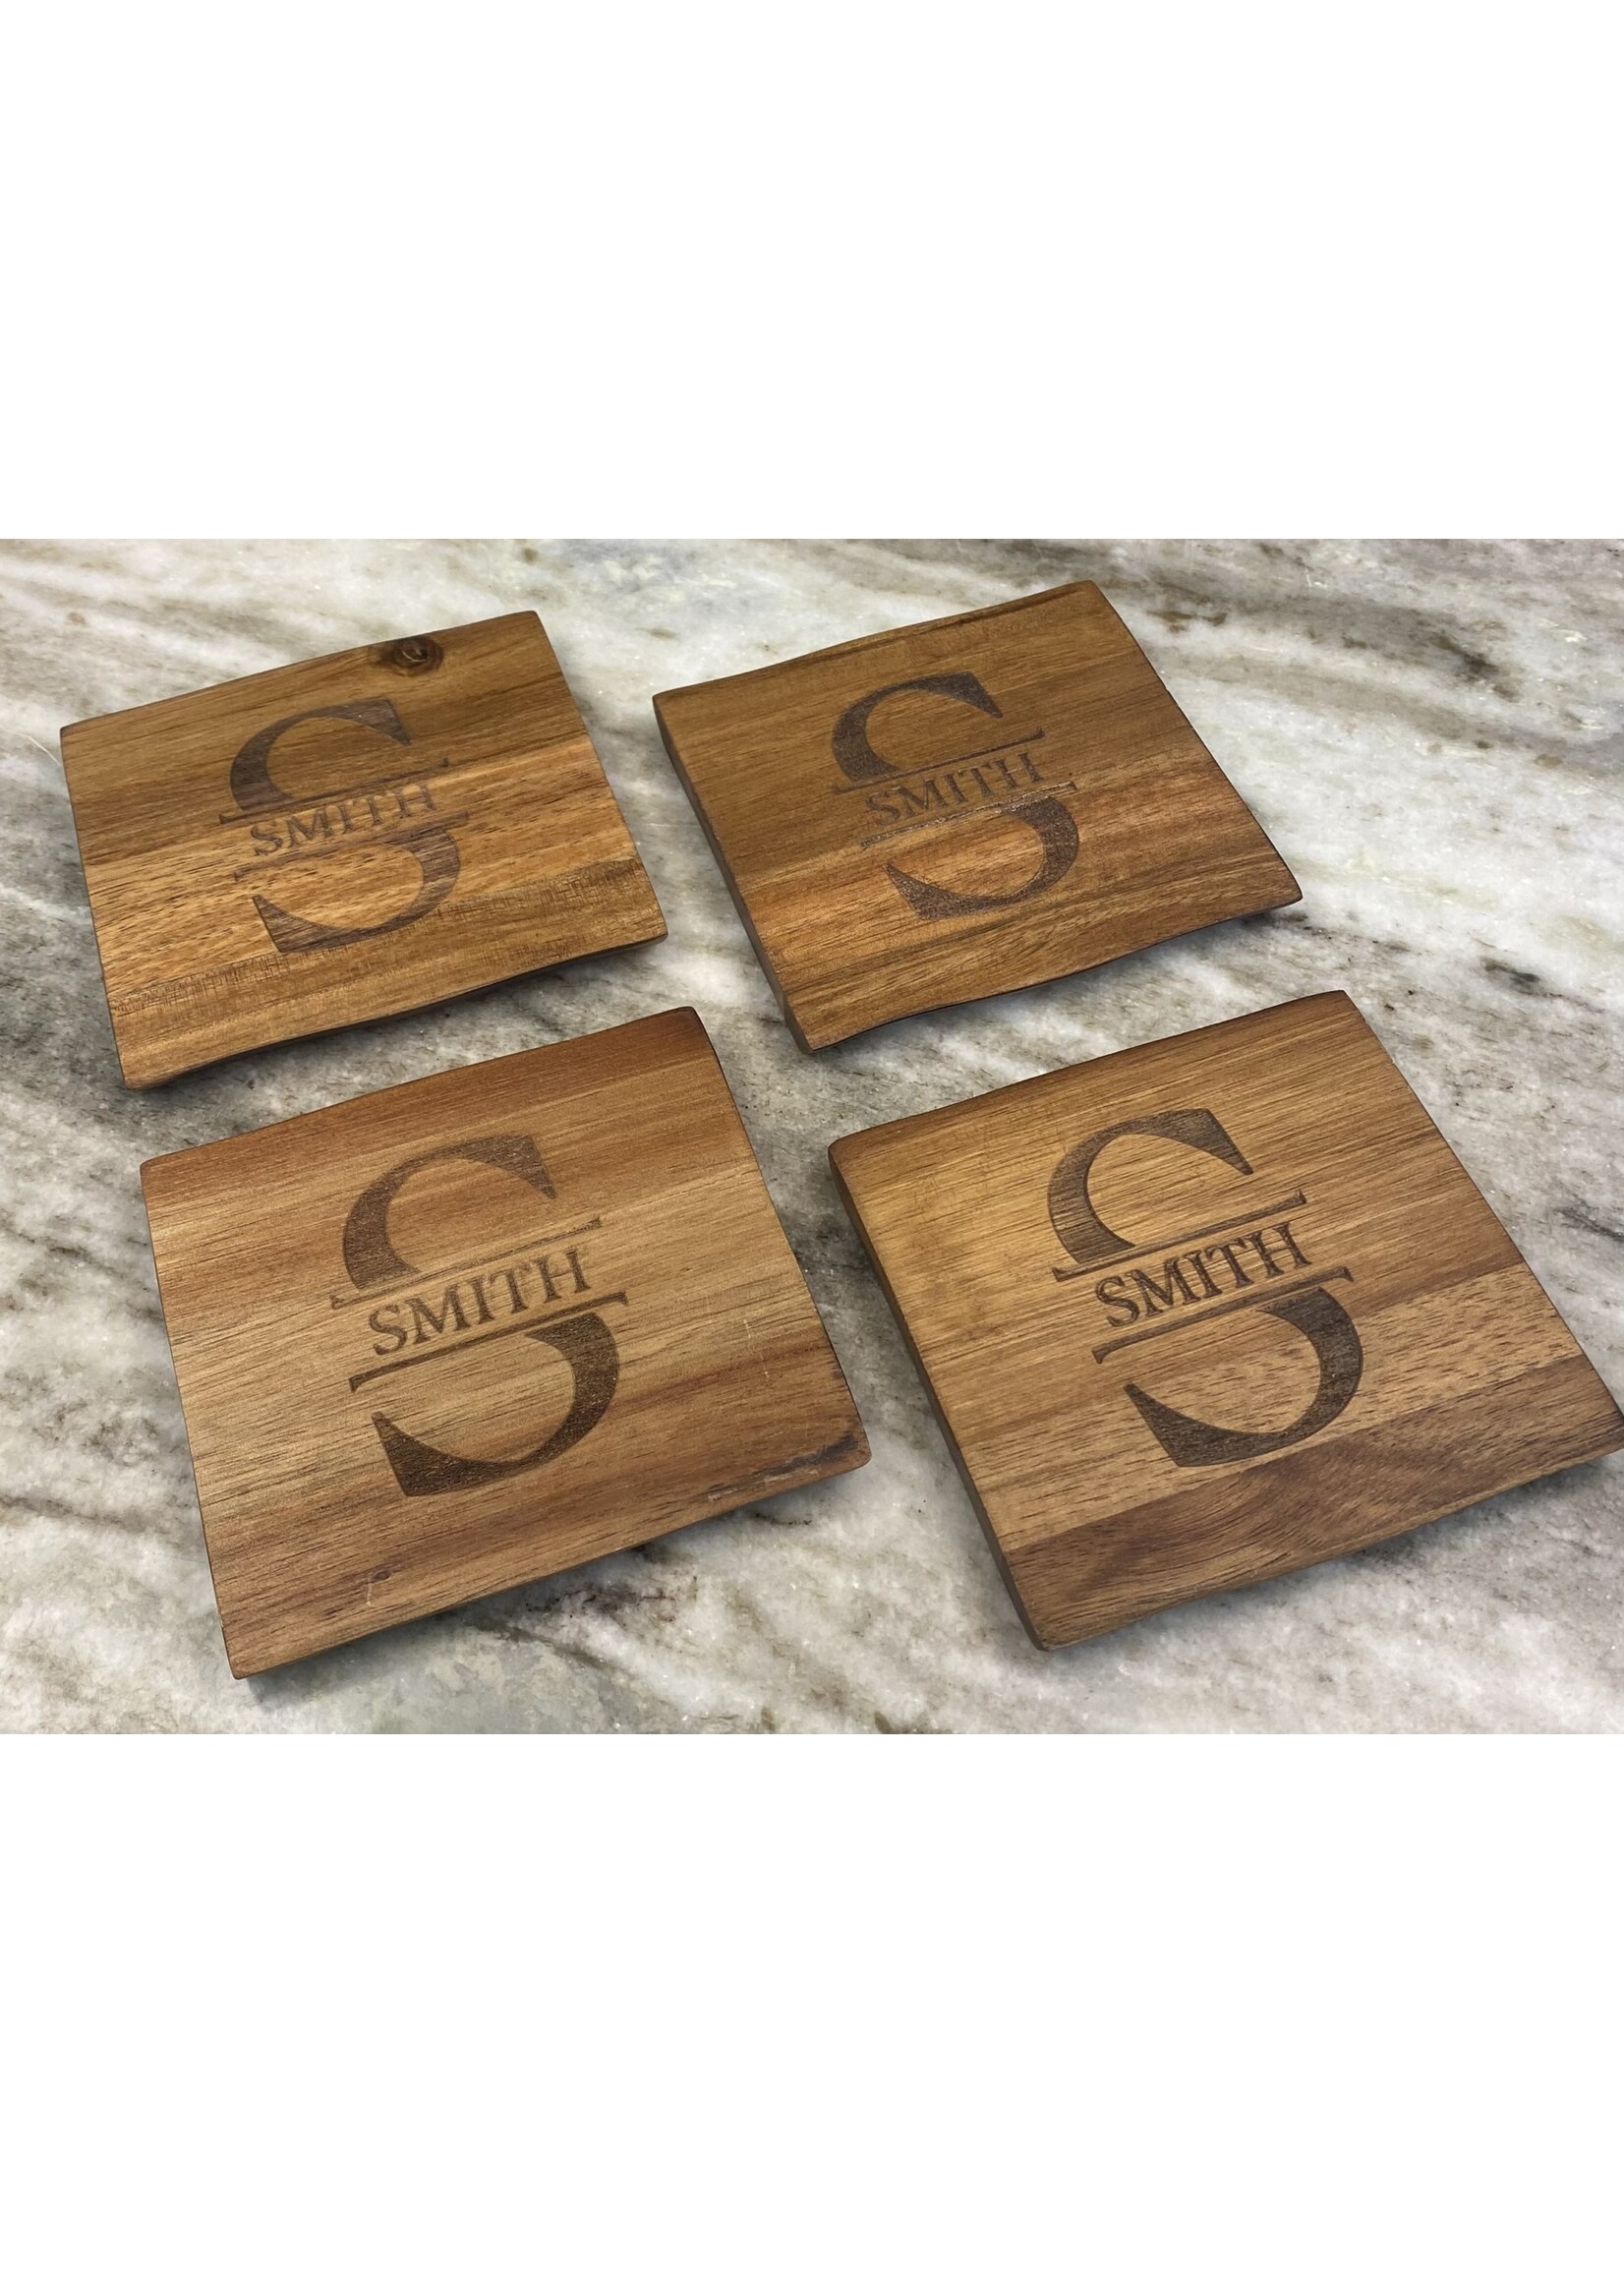 Prim In Proper Wood Coaster 4" Square Personalized Set of 4